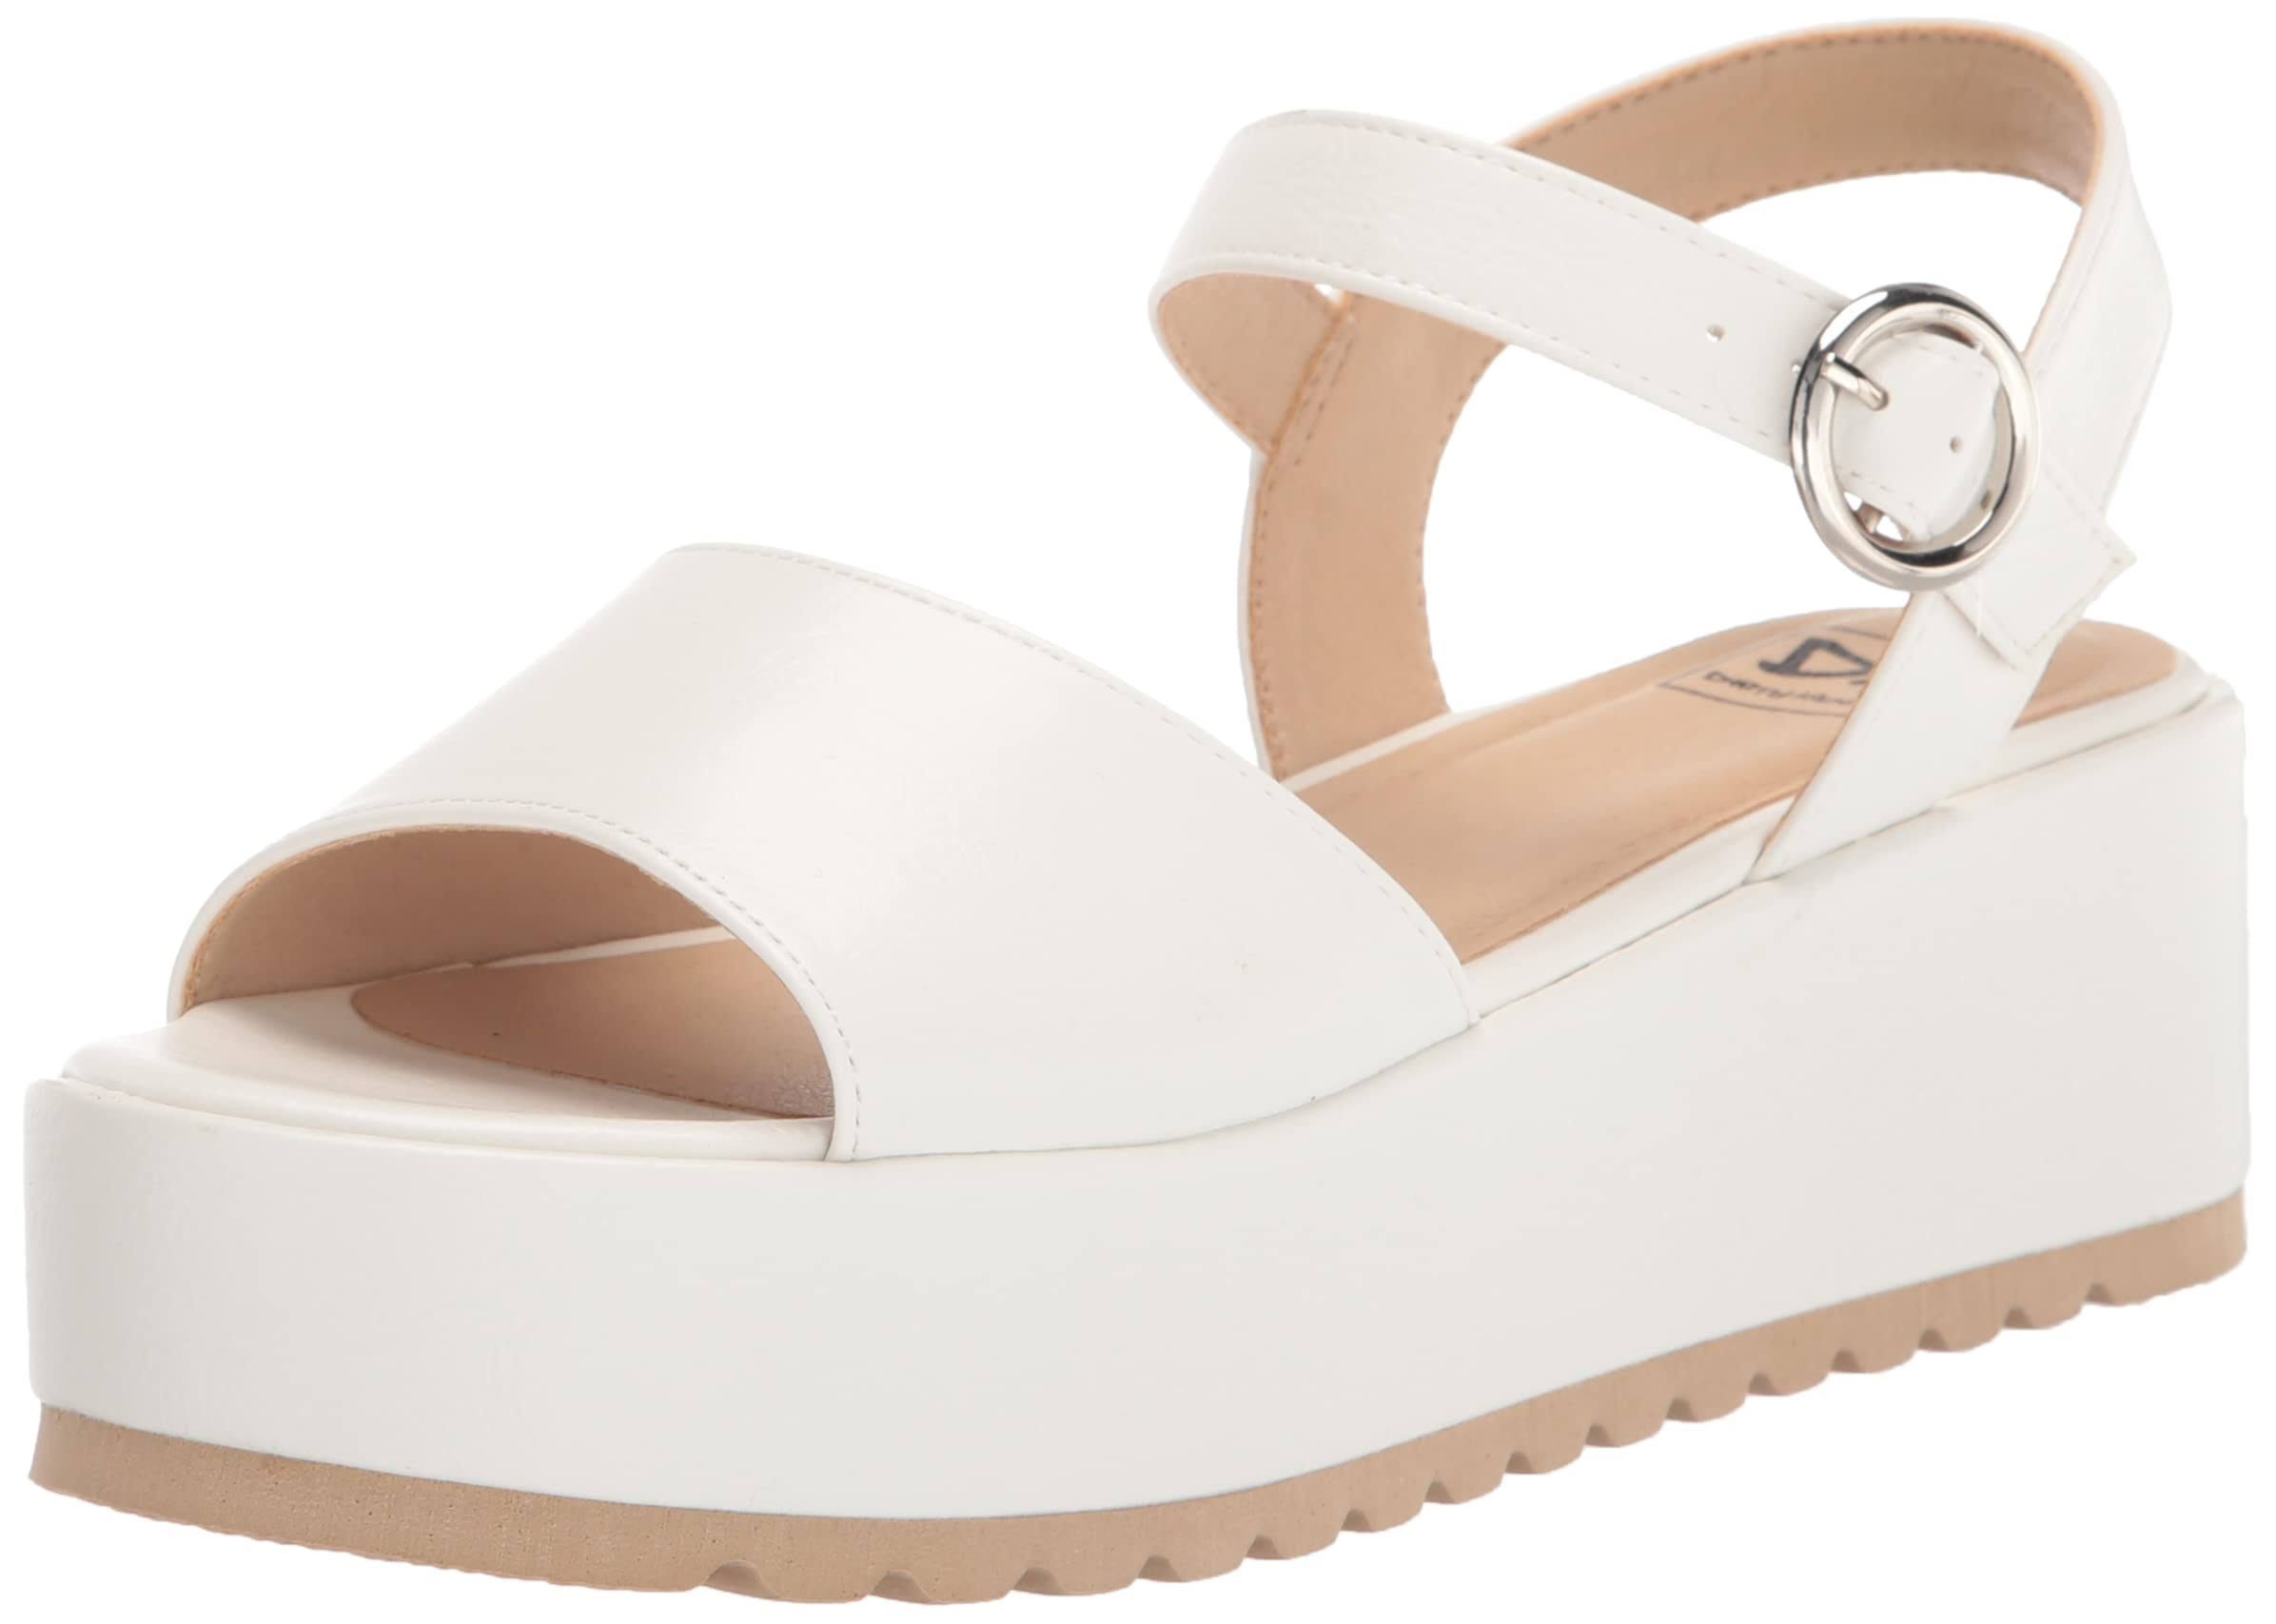 Sleek White Platform Sandals with Buckle Closure | Image